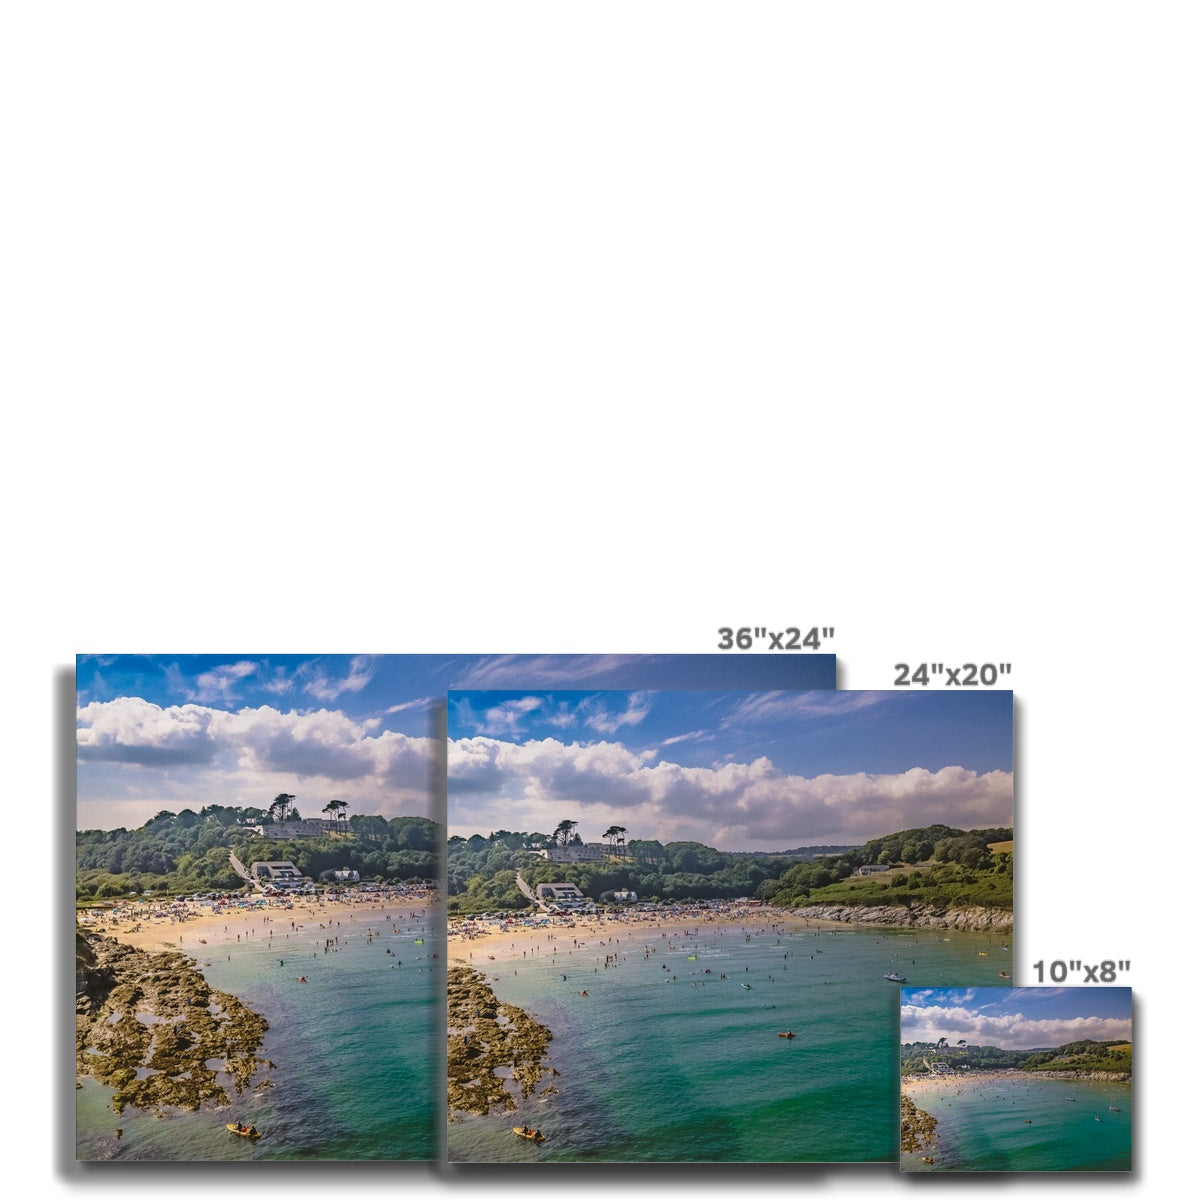 maenporth beach canvas sizes